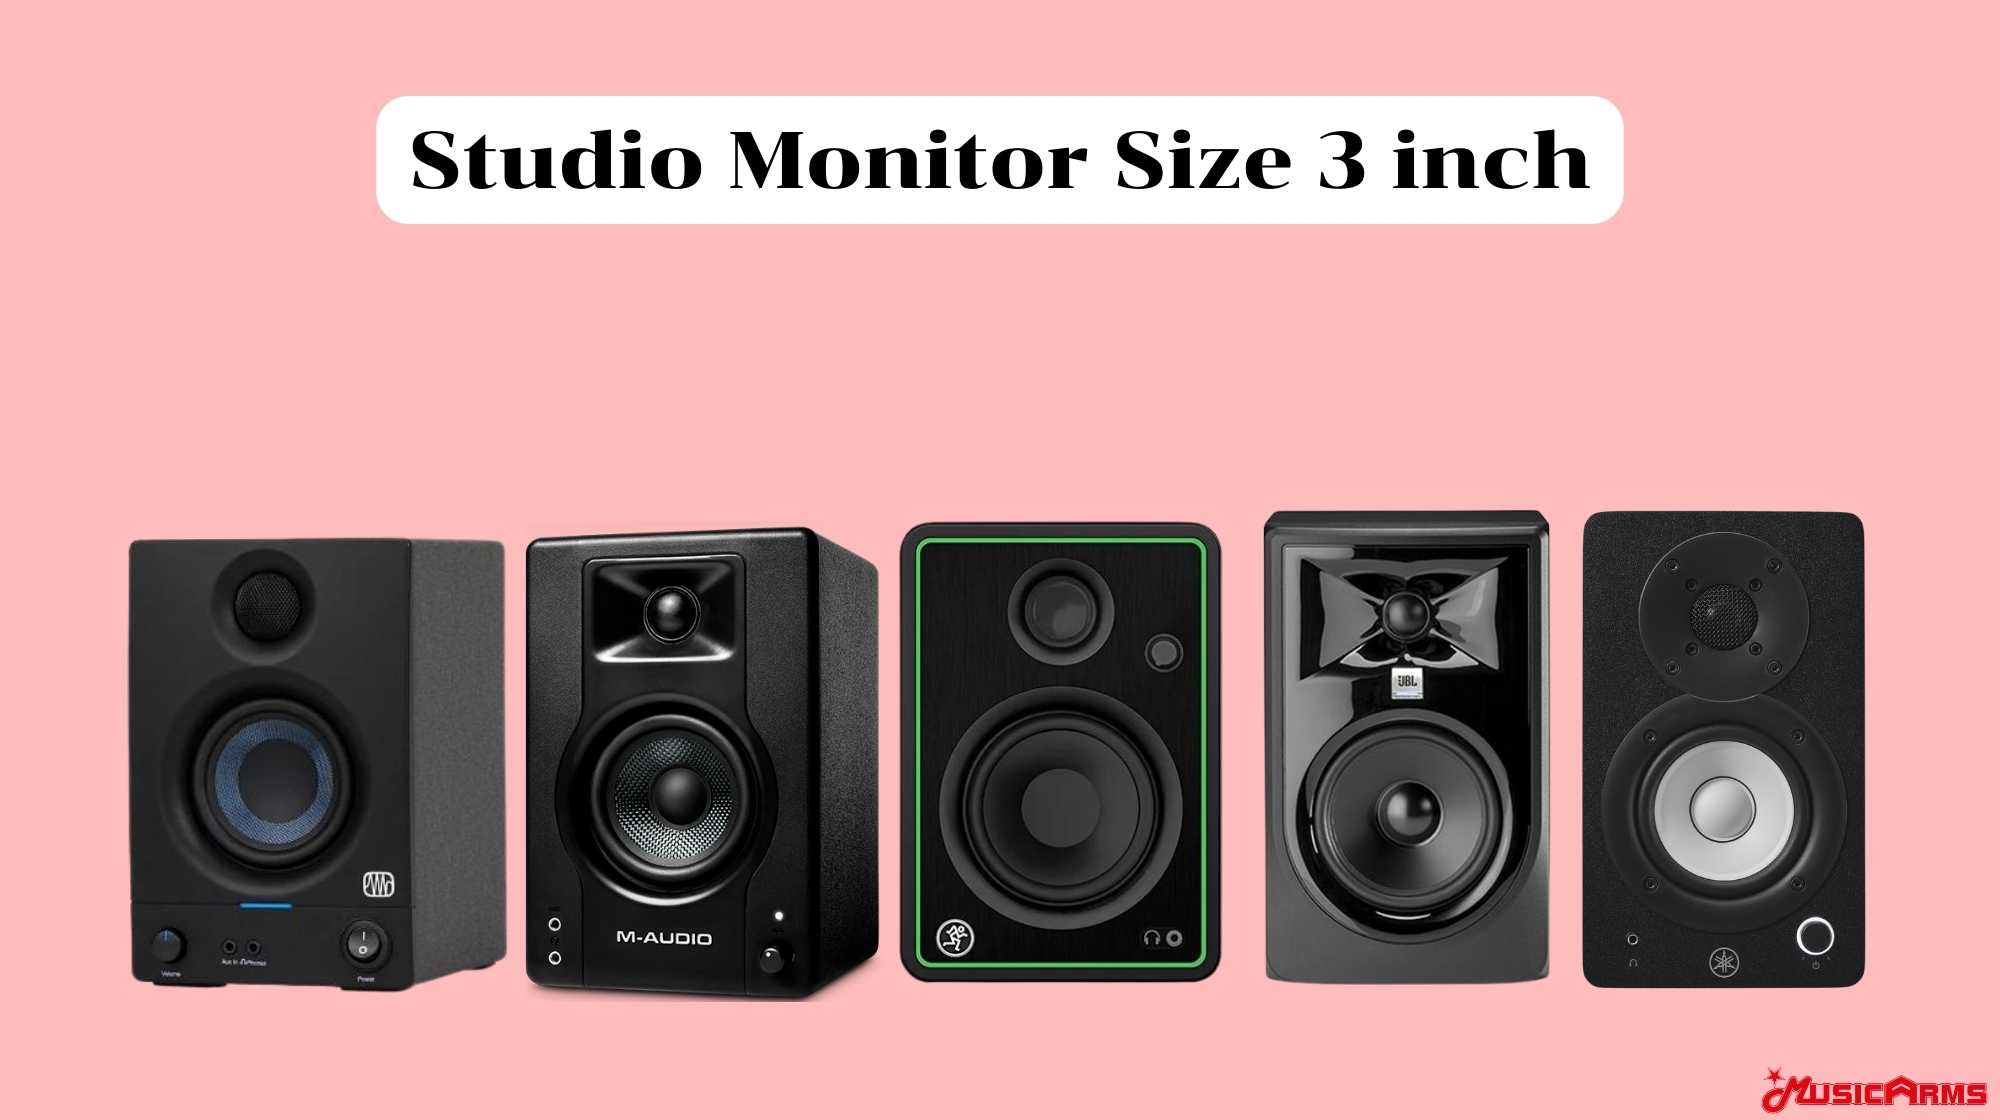 Studio Monitor Size 3 inch